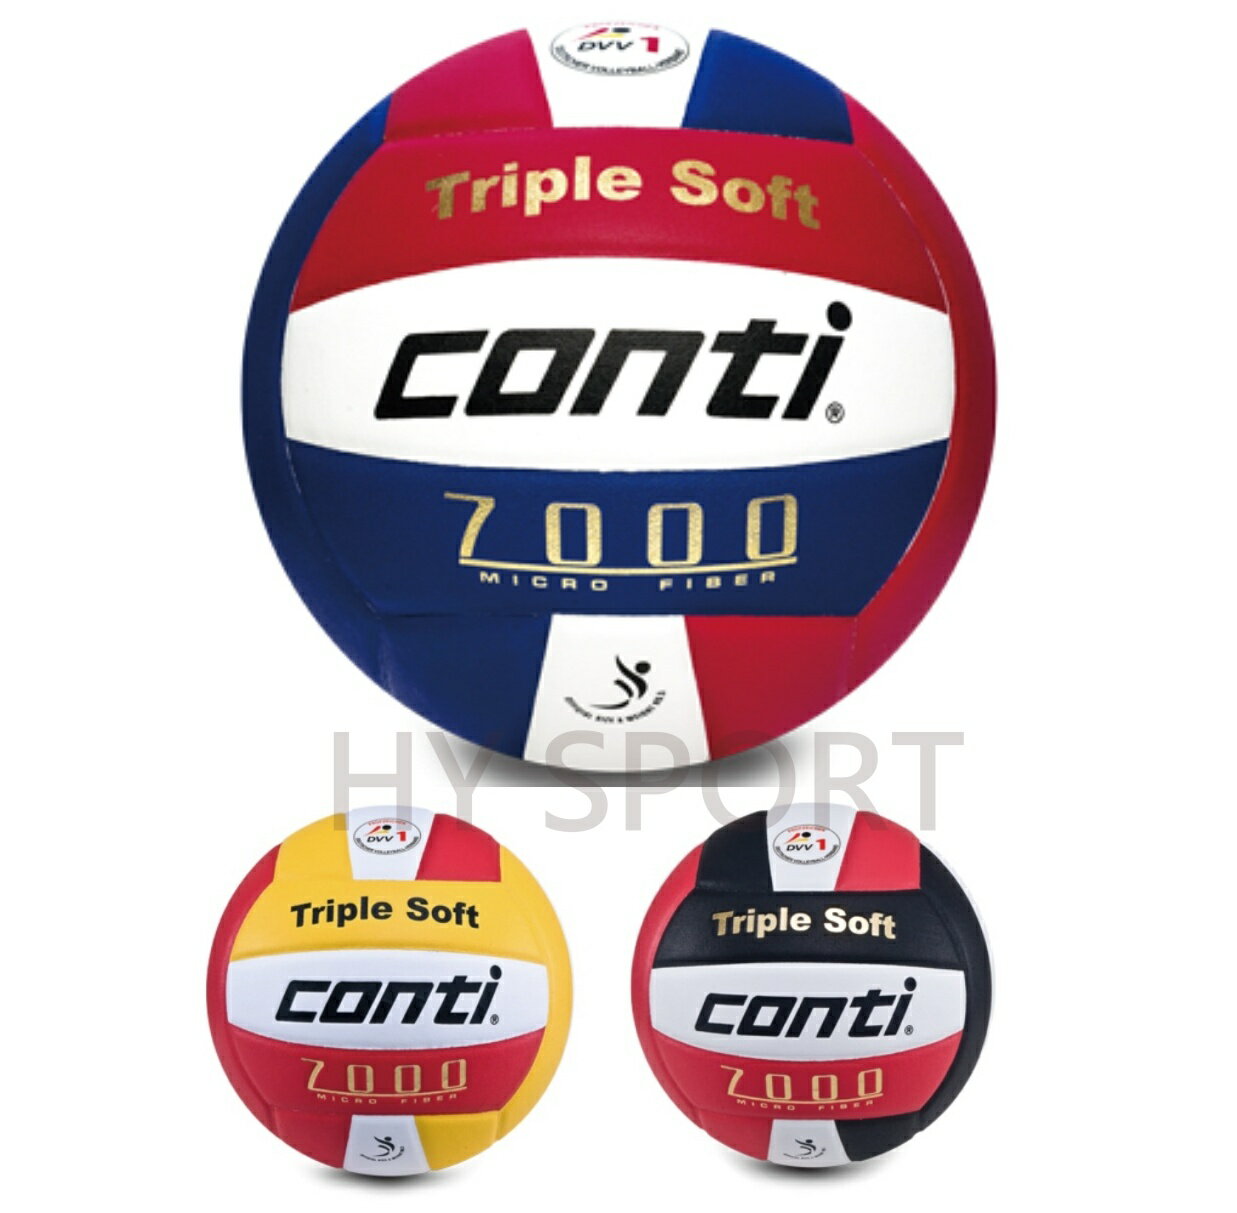 CONTI 日本超細纖維結構專利排球 7000系列 (5號球) 三色 台灣技術研發 #V7000